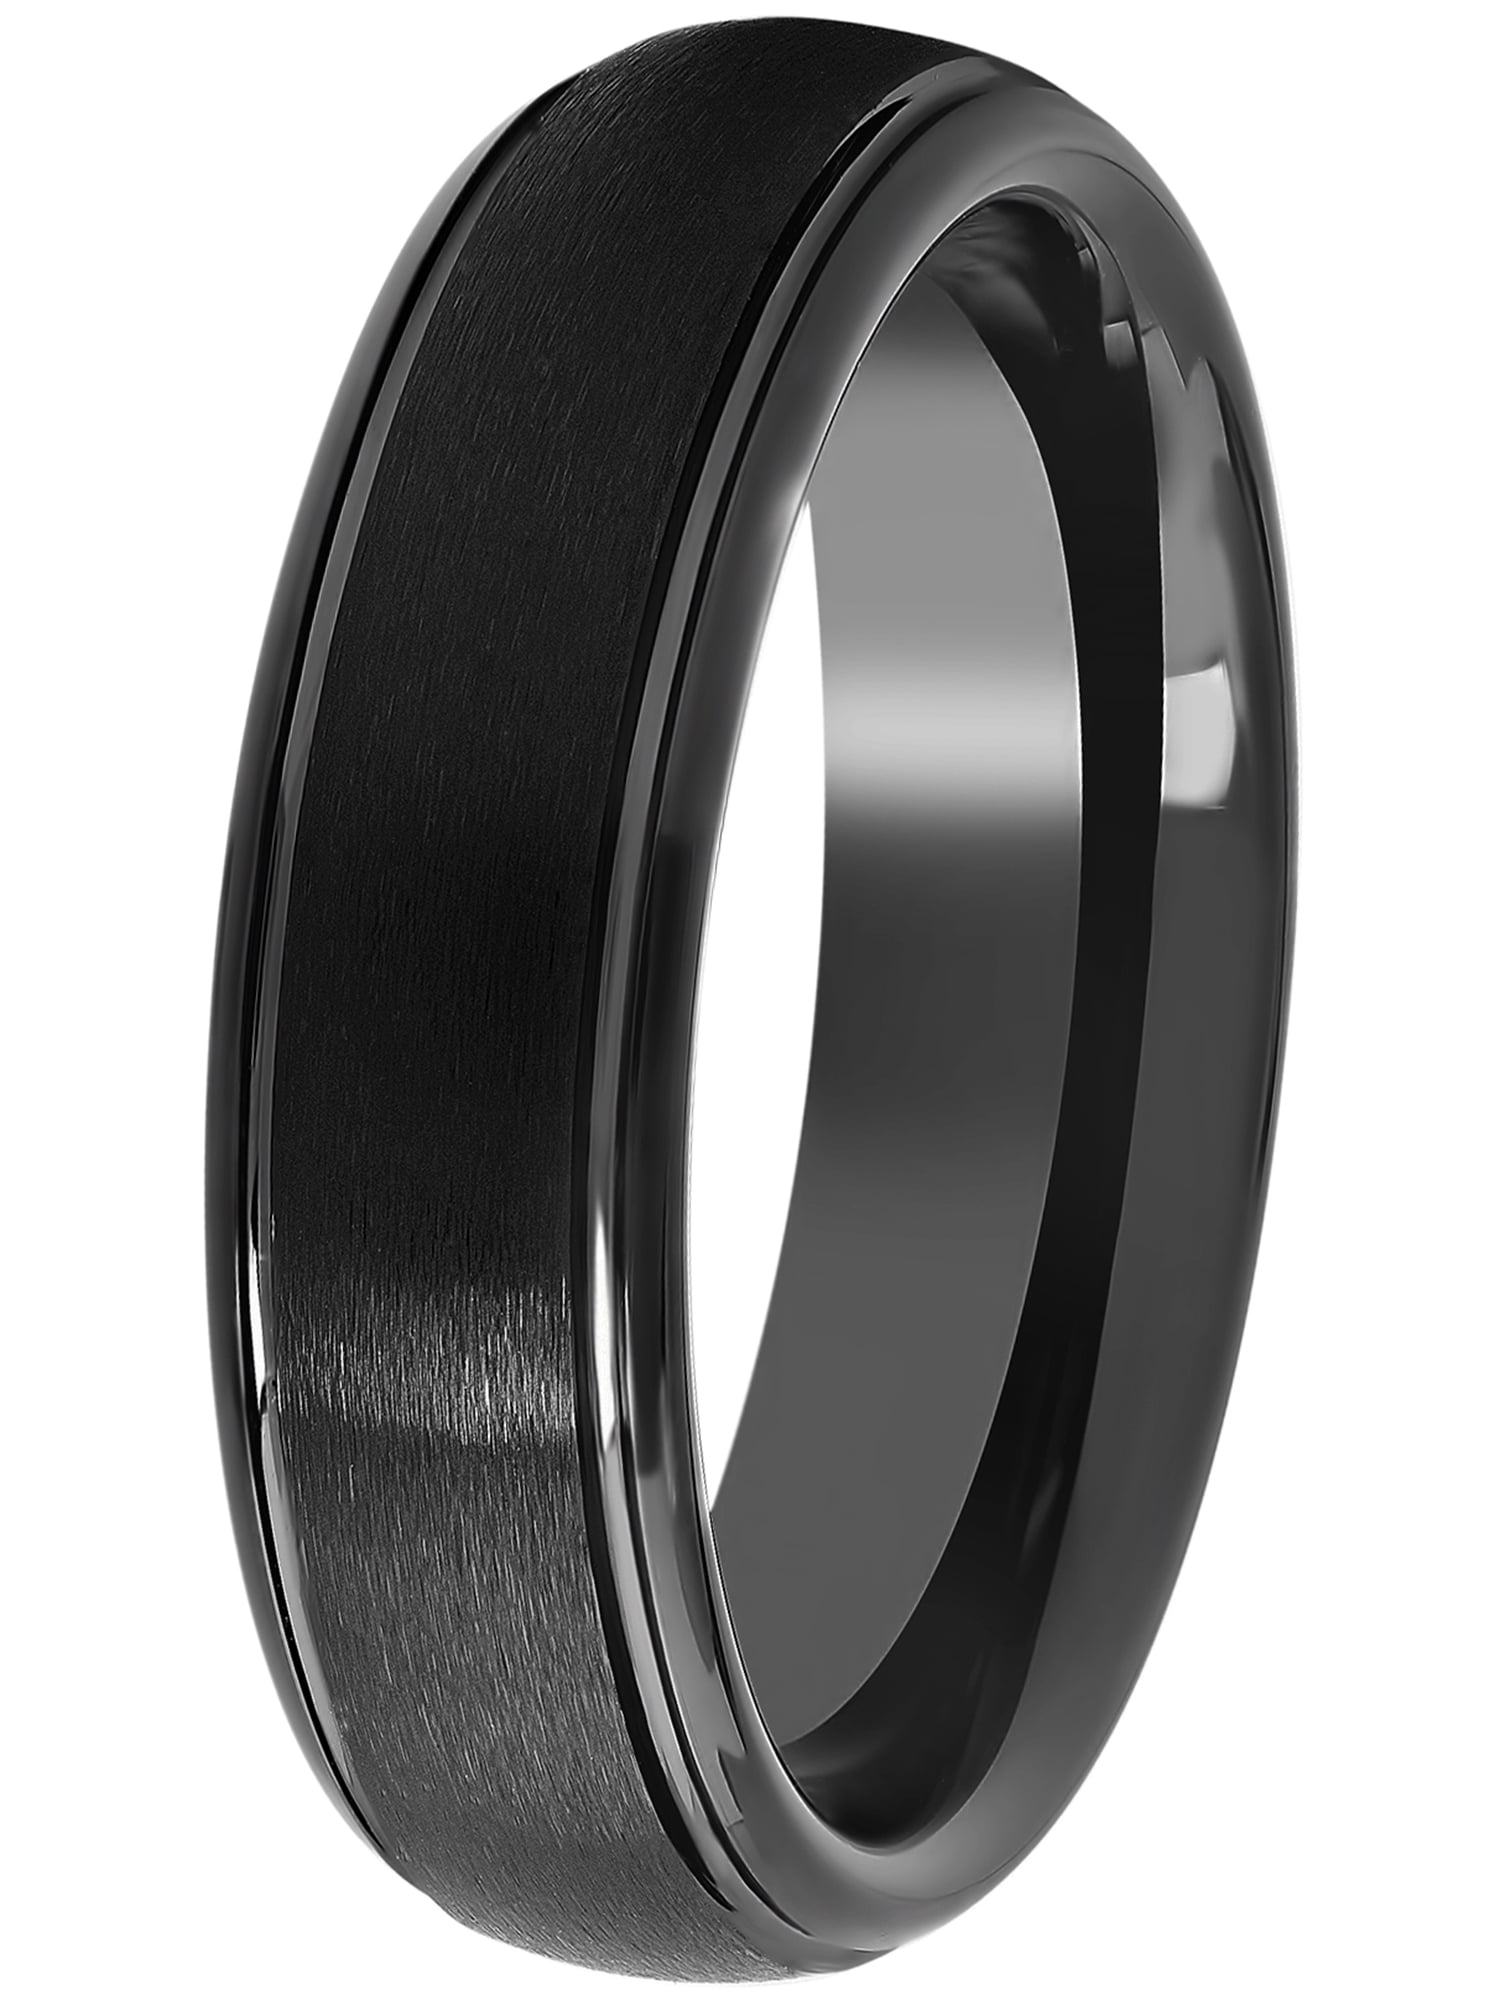 Dome Tungsten Wedding Ring,Black Wedding Ring,Espresso Tungsten Ring,Anniversary Ring,Men's Wedding Ring,Women's Ring,8mm & 6mm,Comfort Fit